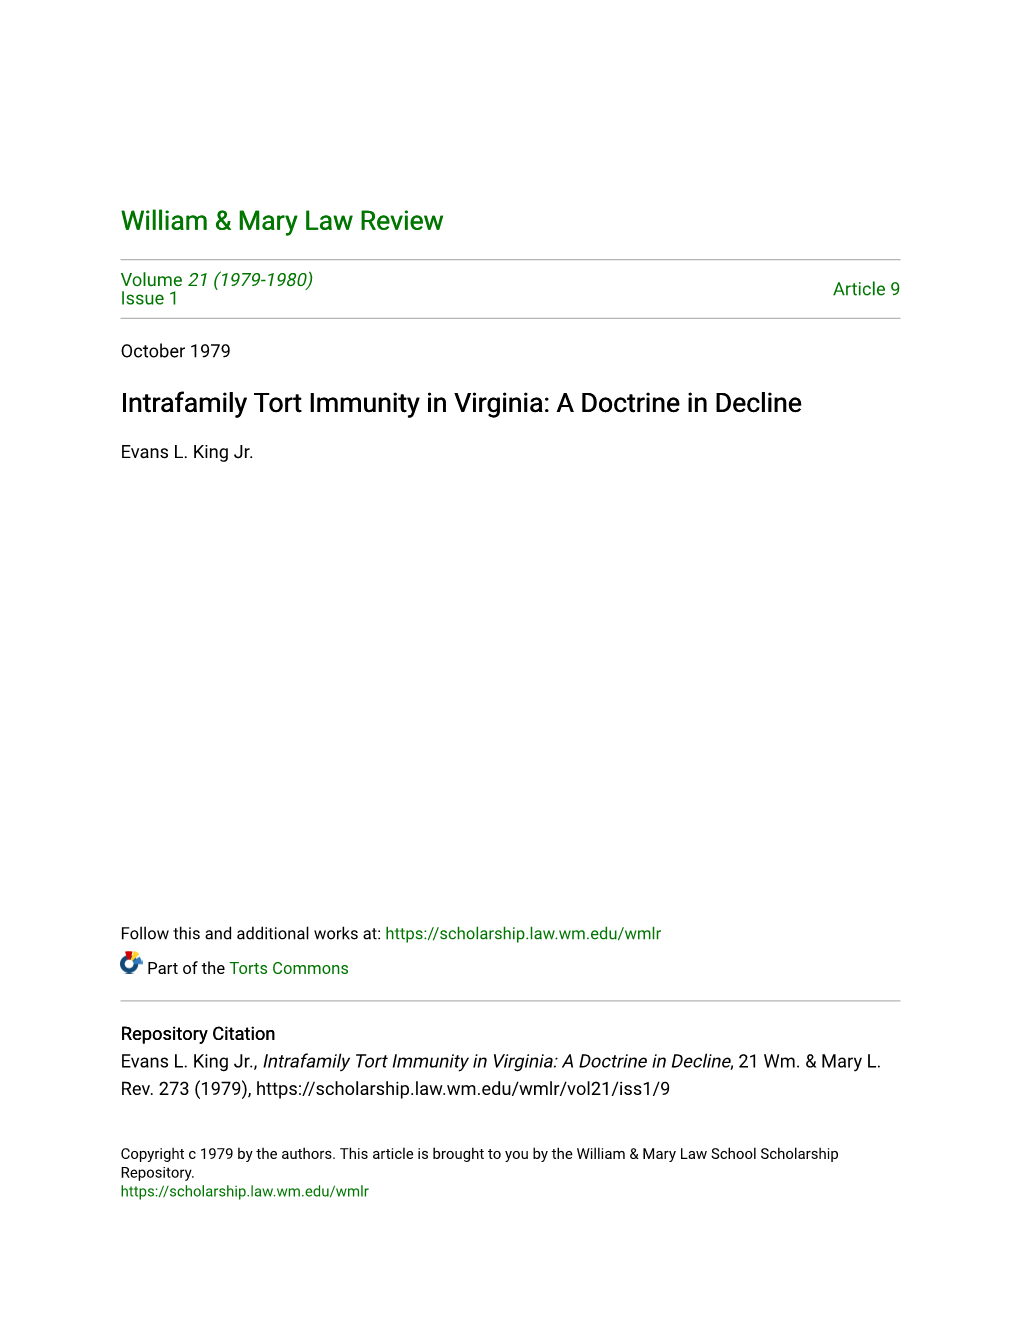 Intrafamily Tort Immunity in Virginia: a Doctrine in Decline